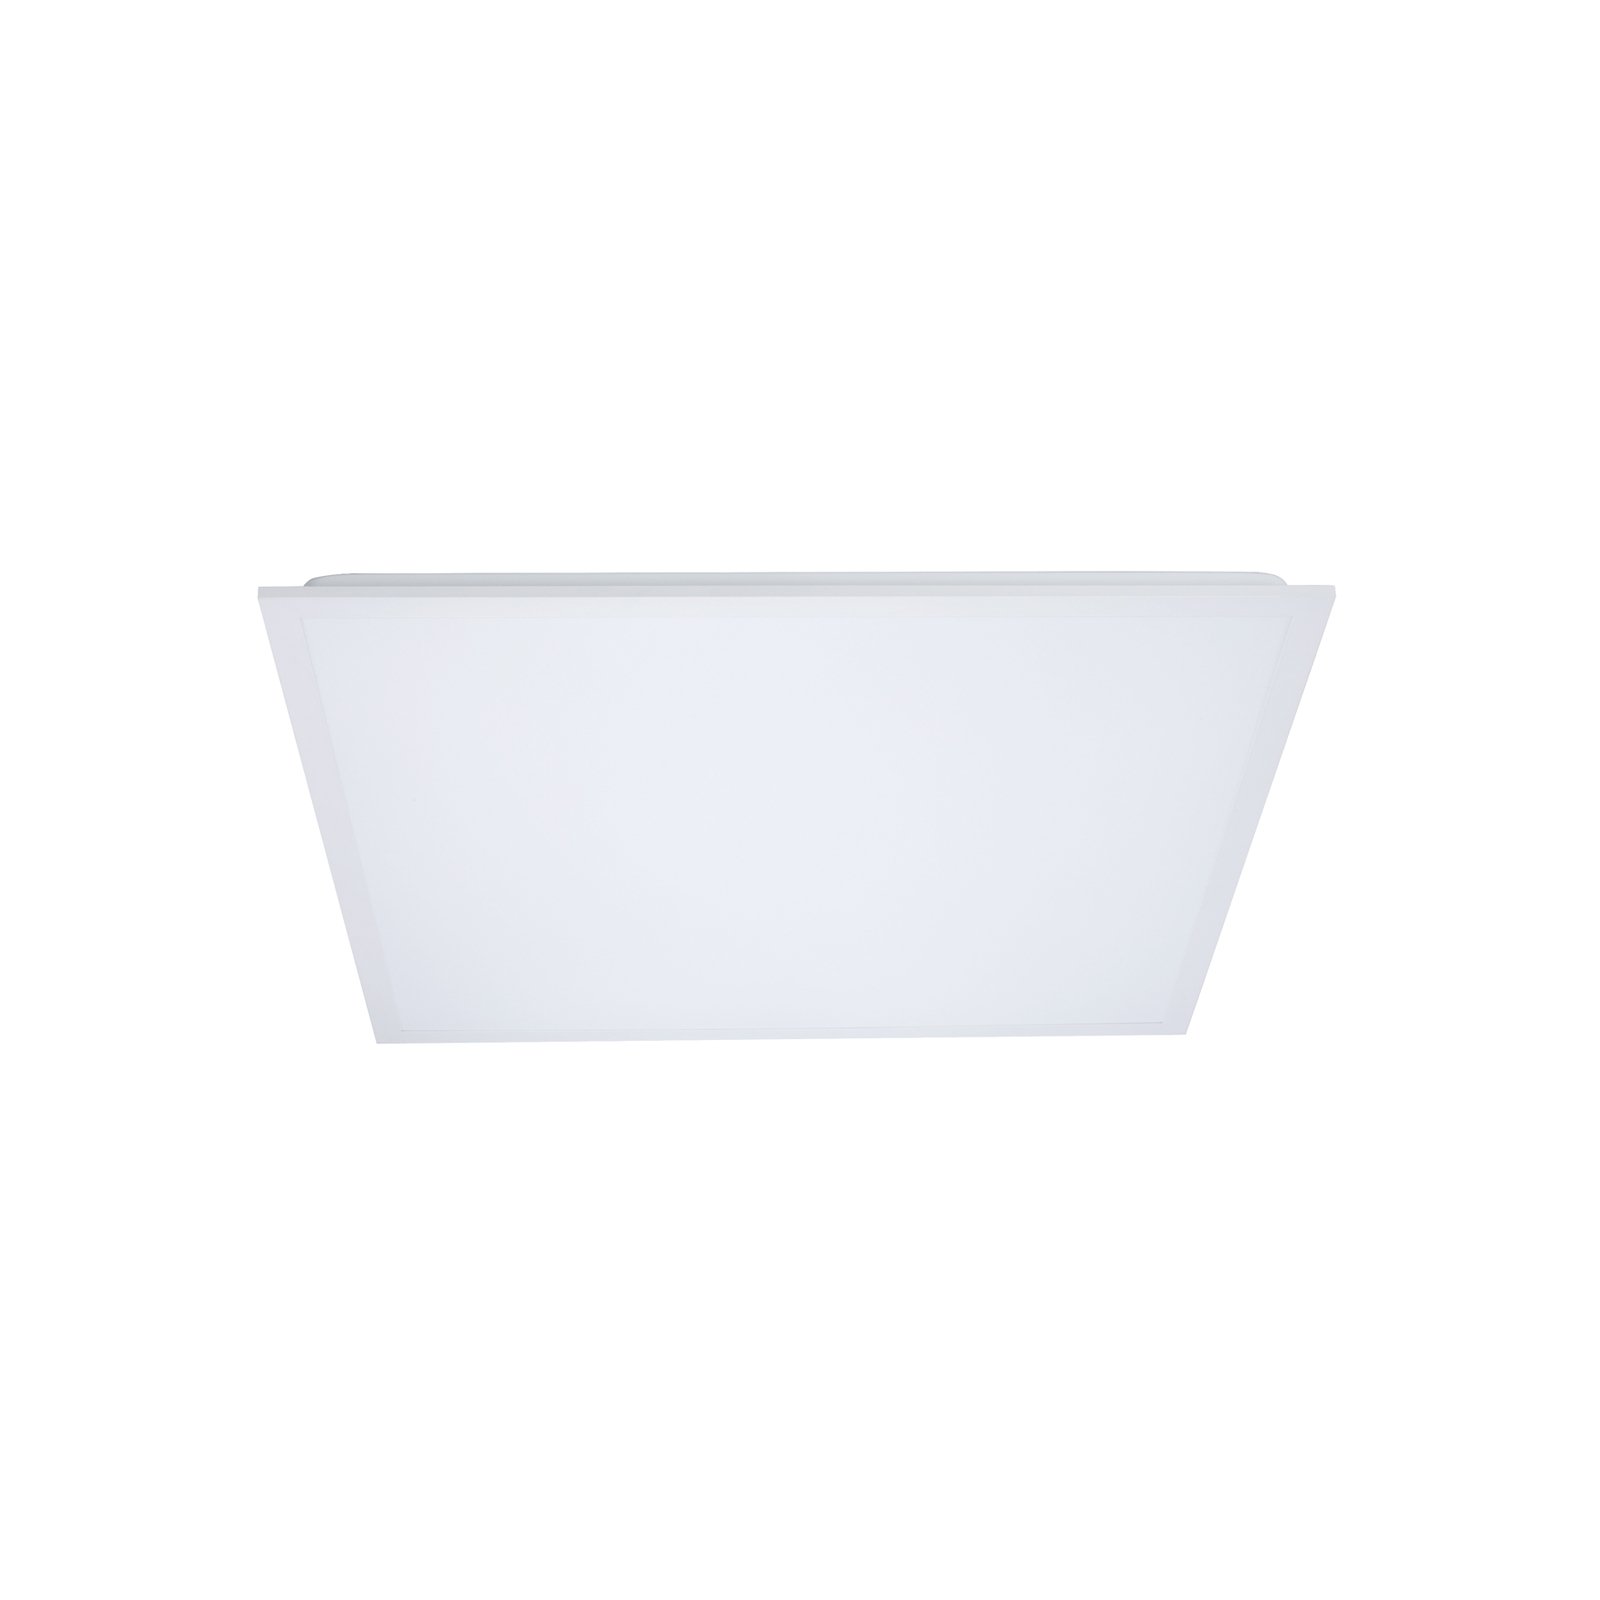 Sylvania LED-Panel Start, weiß, 62 x 62 cm, 30 W, UGR19, 830